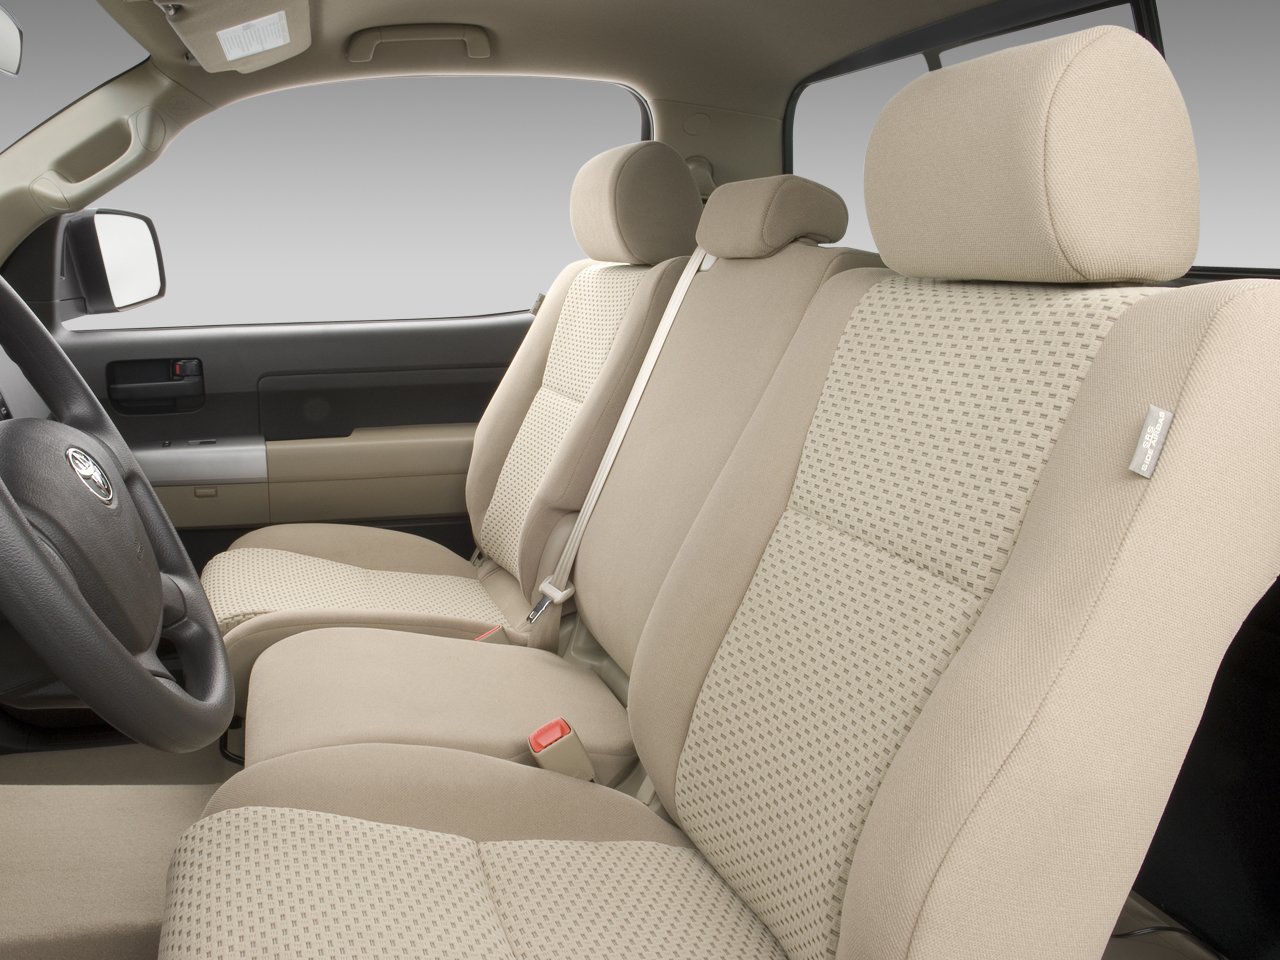 bench seat plastic armrest comfort | Toyota Tundra Forum